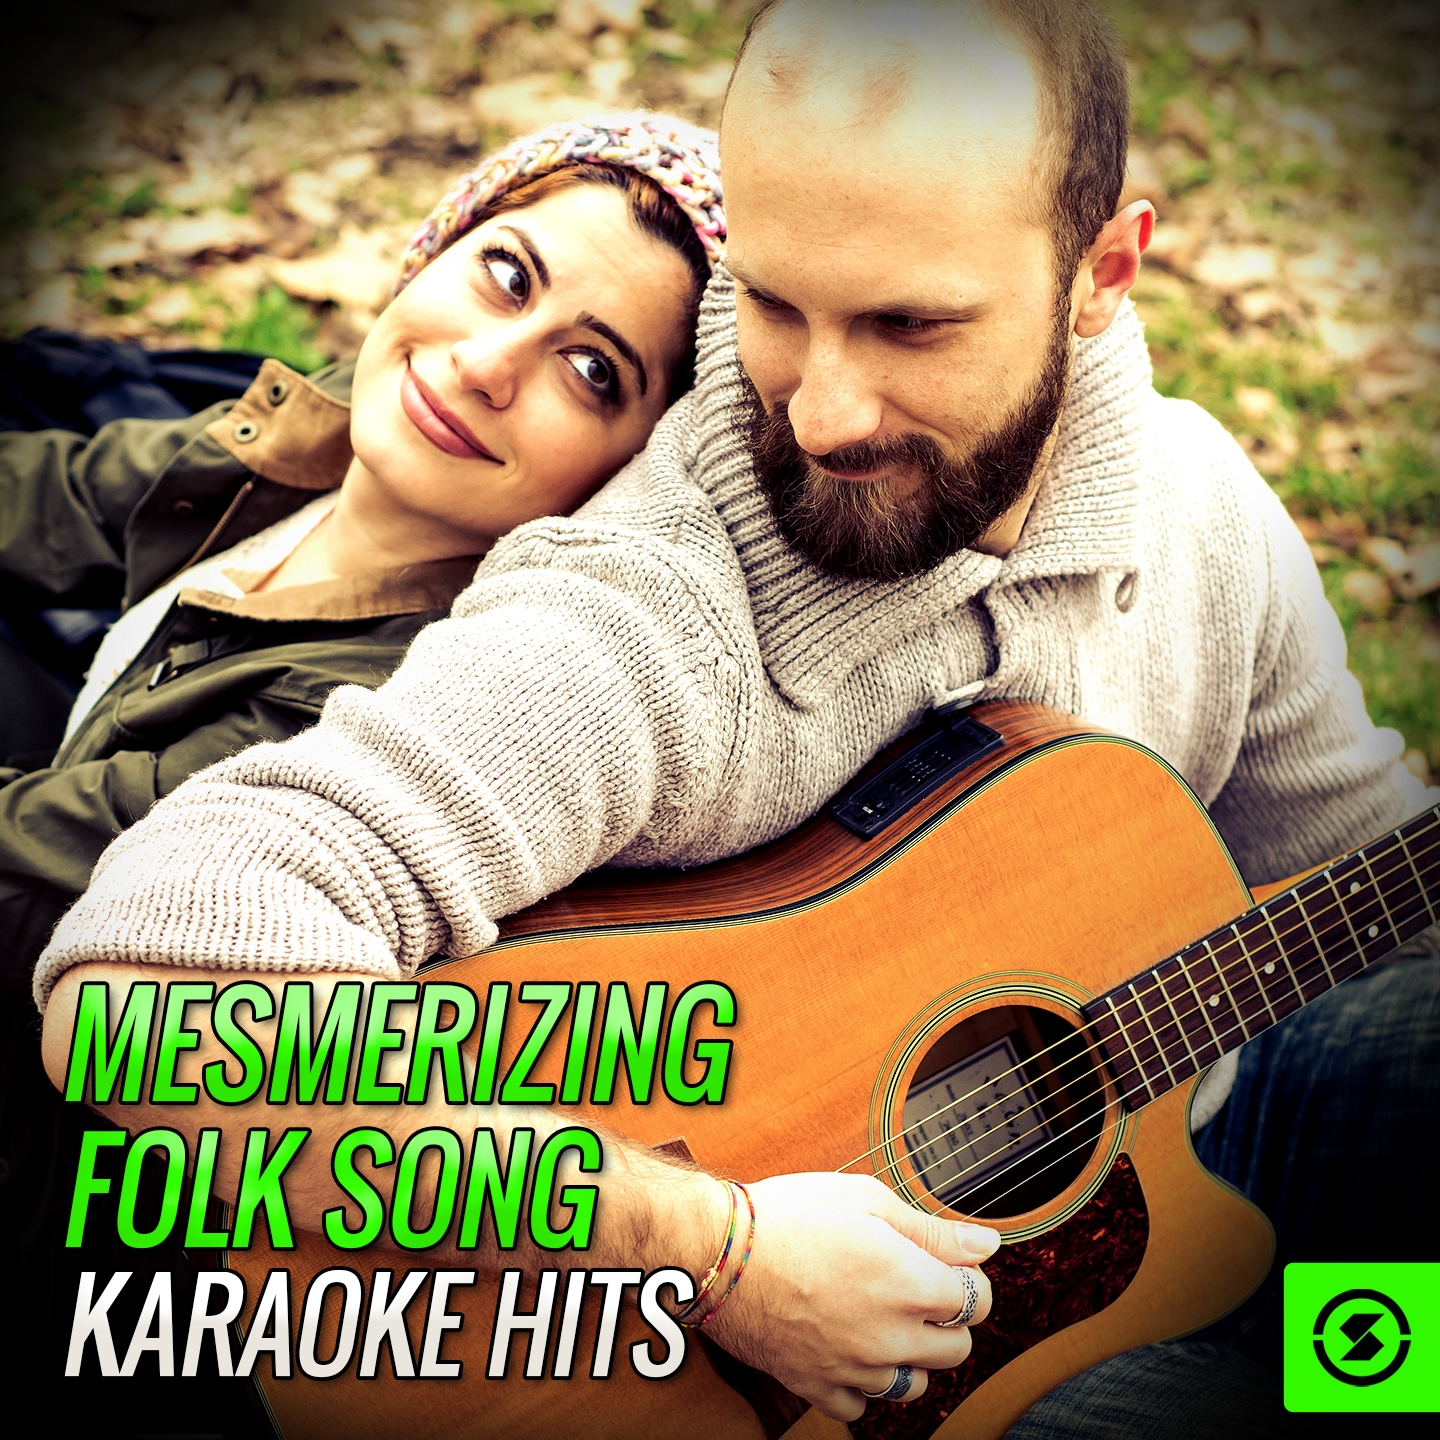 Mesmerizing Folk Songs Karaoke Hits